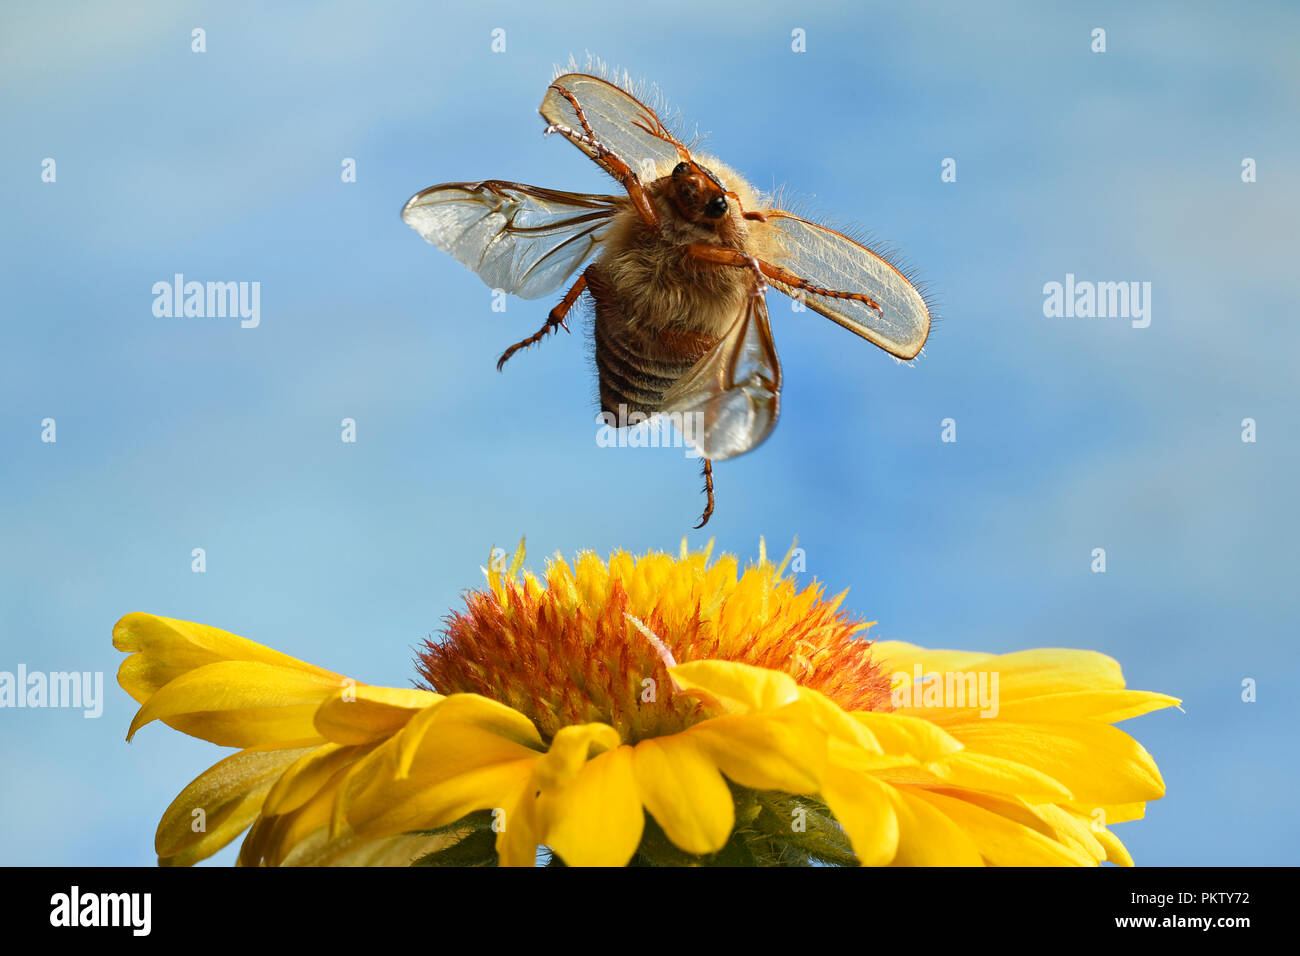 European June beetle (Amphimallon solstitiale), in flight, at a cockade flower, Germany Stock Photo